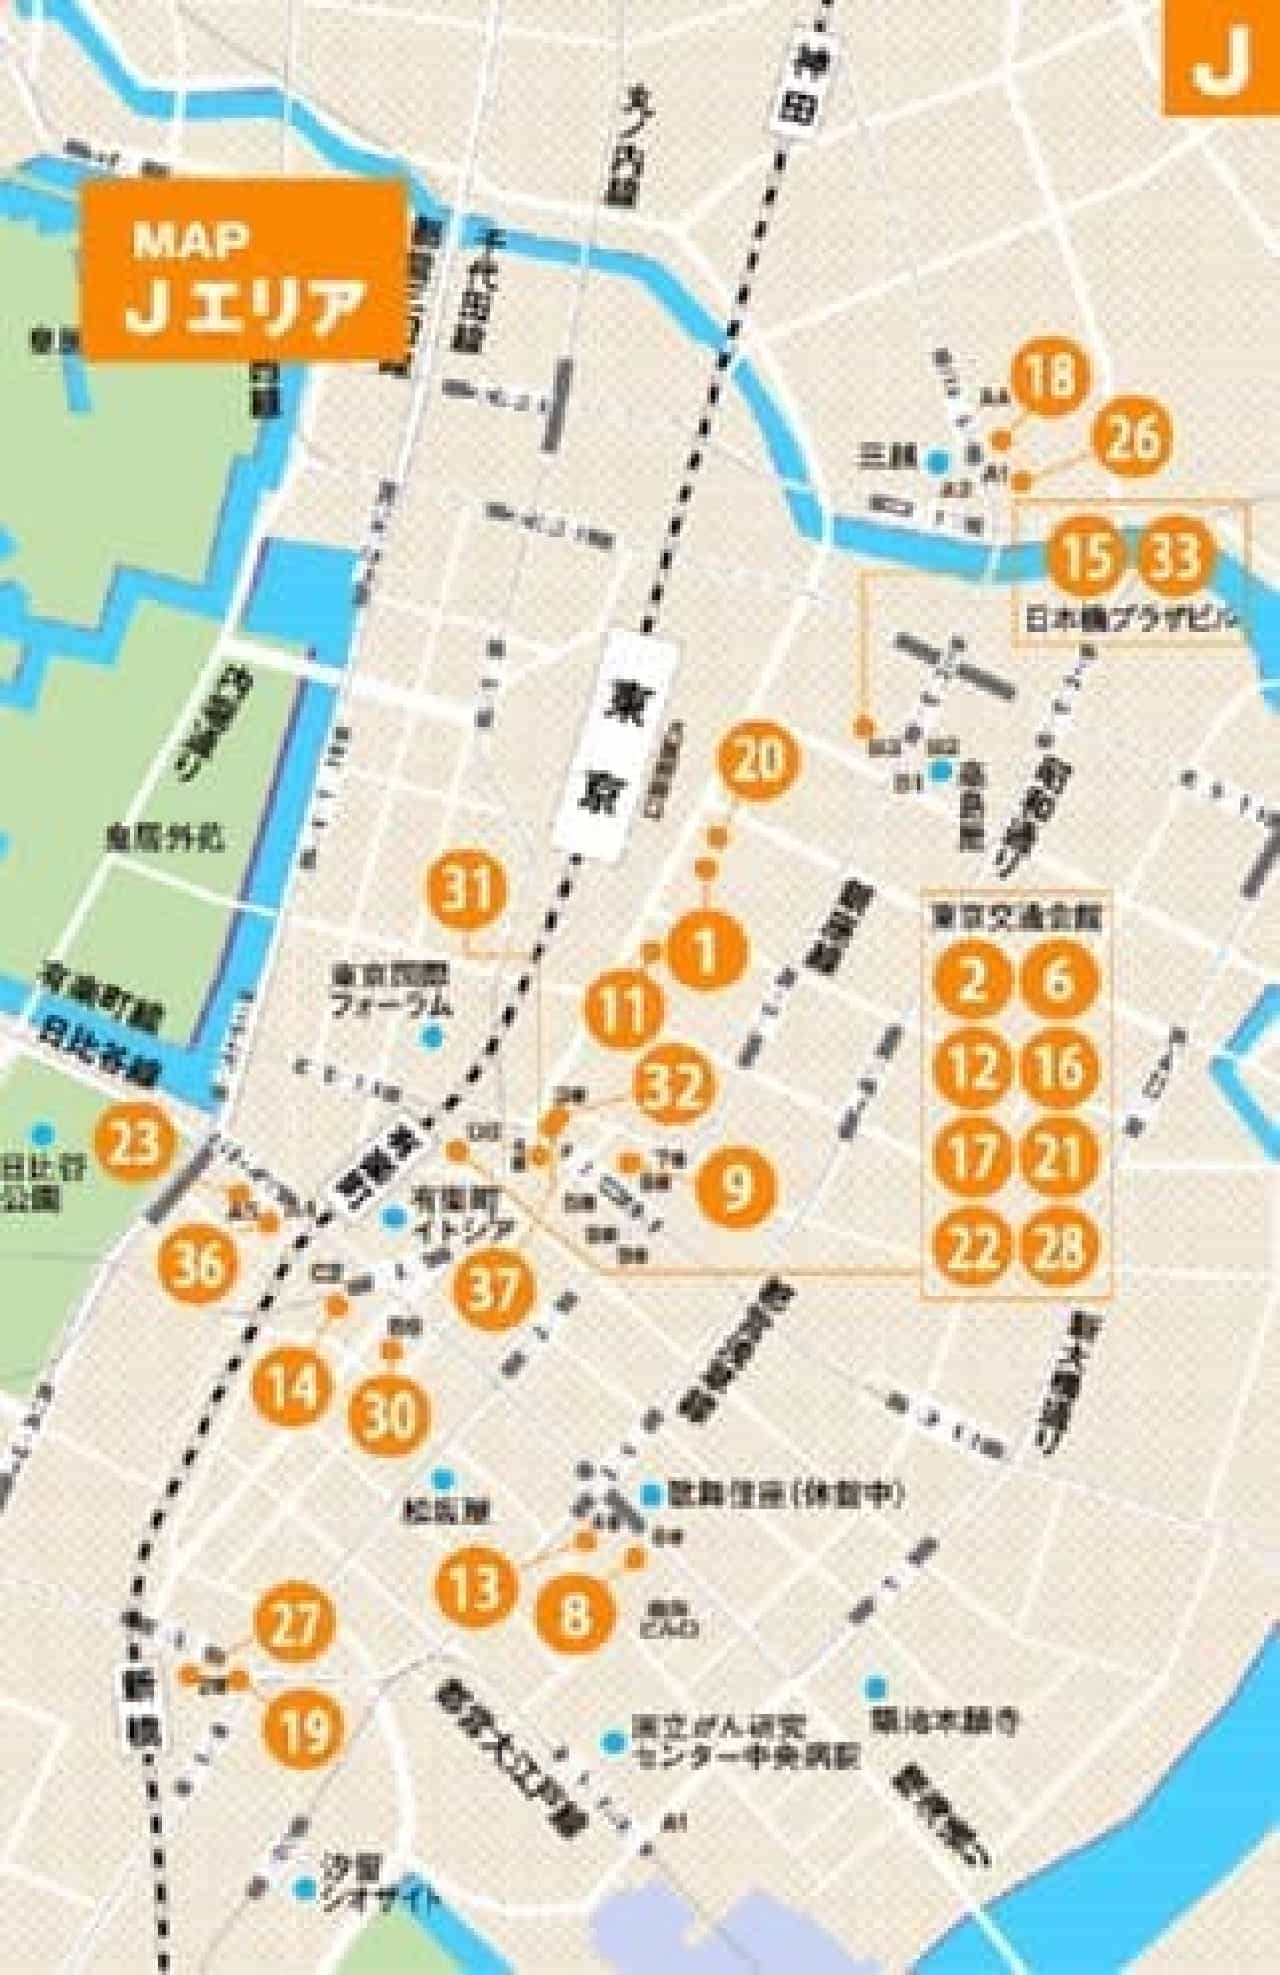 The area from Nihonbashi to Shinbashi is a fierce battleground for antenna shops!